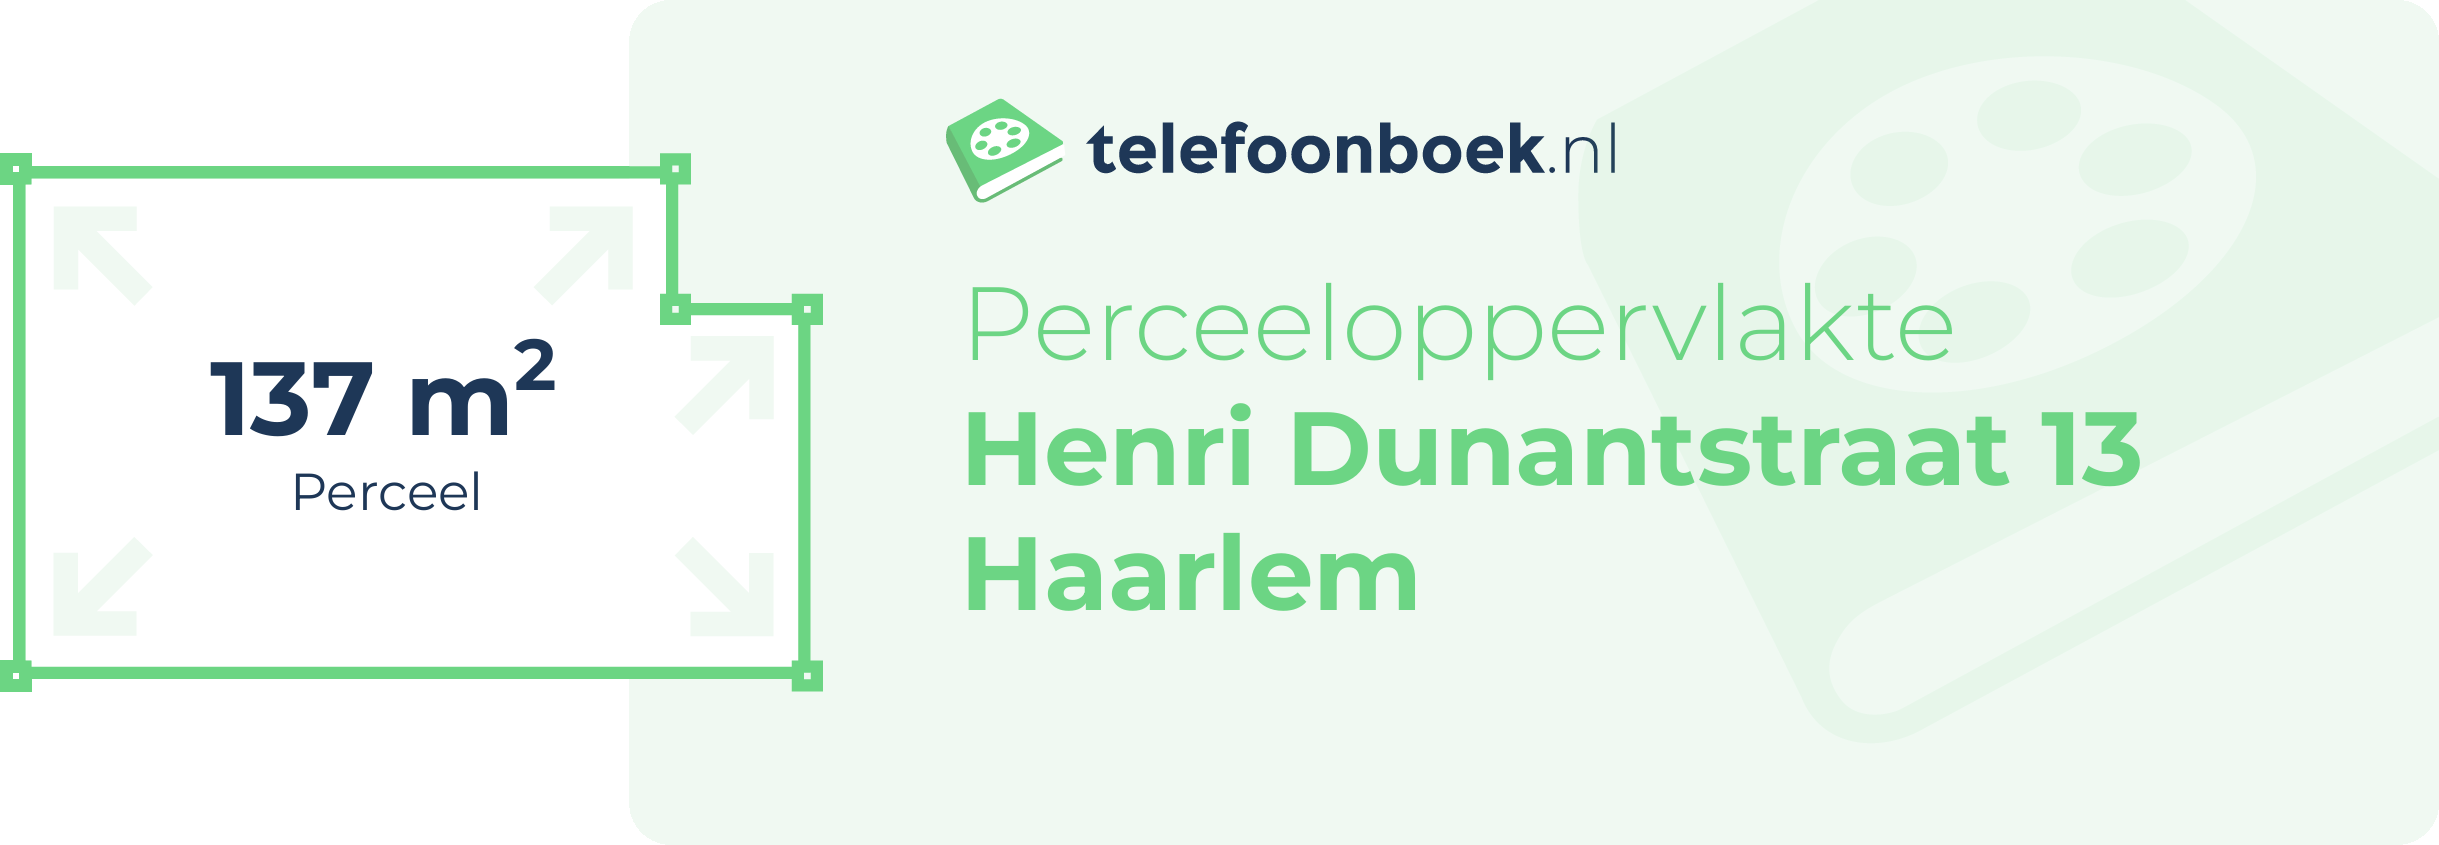 Perceeloppervlakte Henri Dunantstraat 13 Haarlem